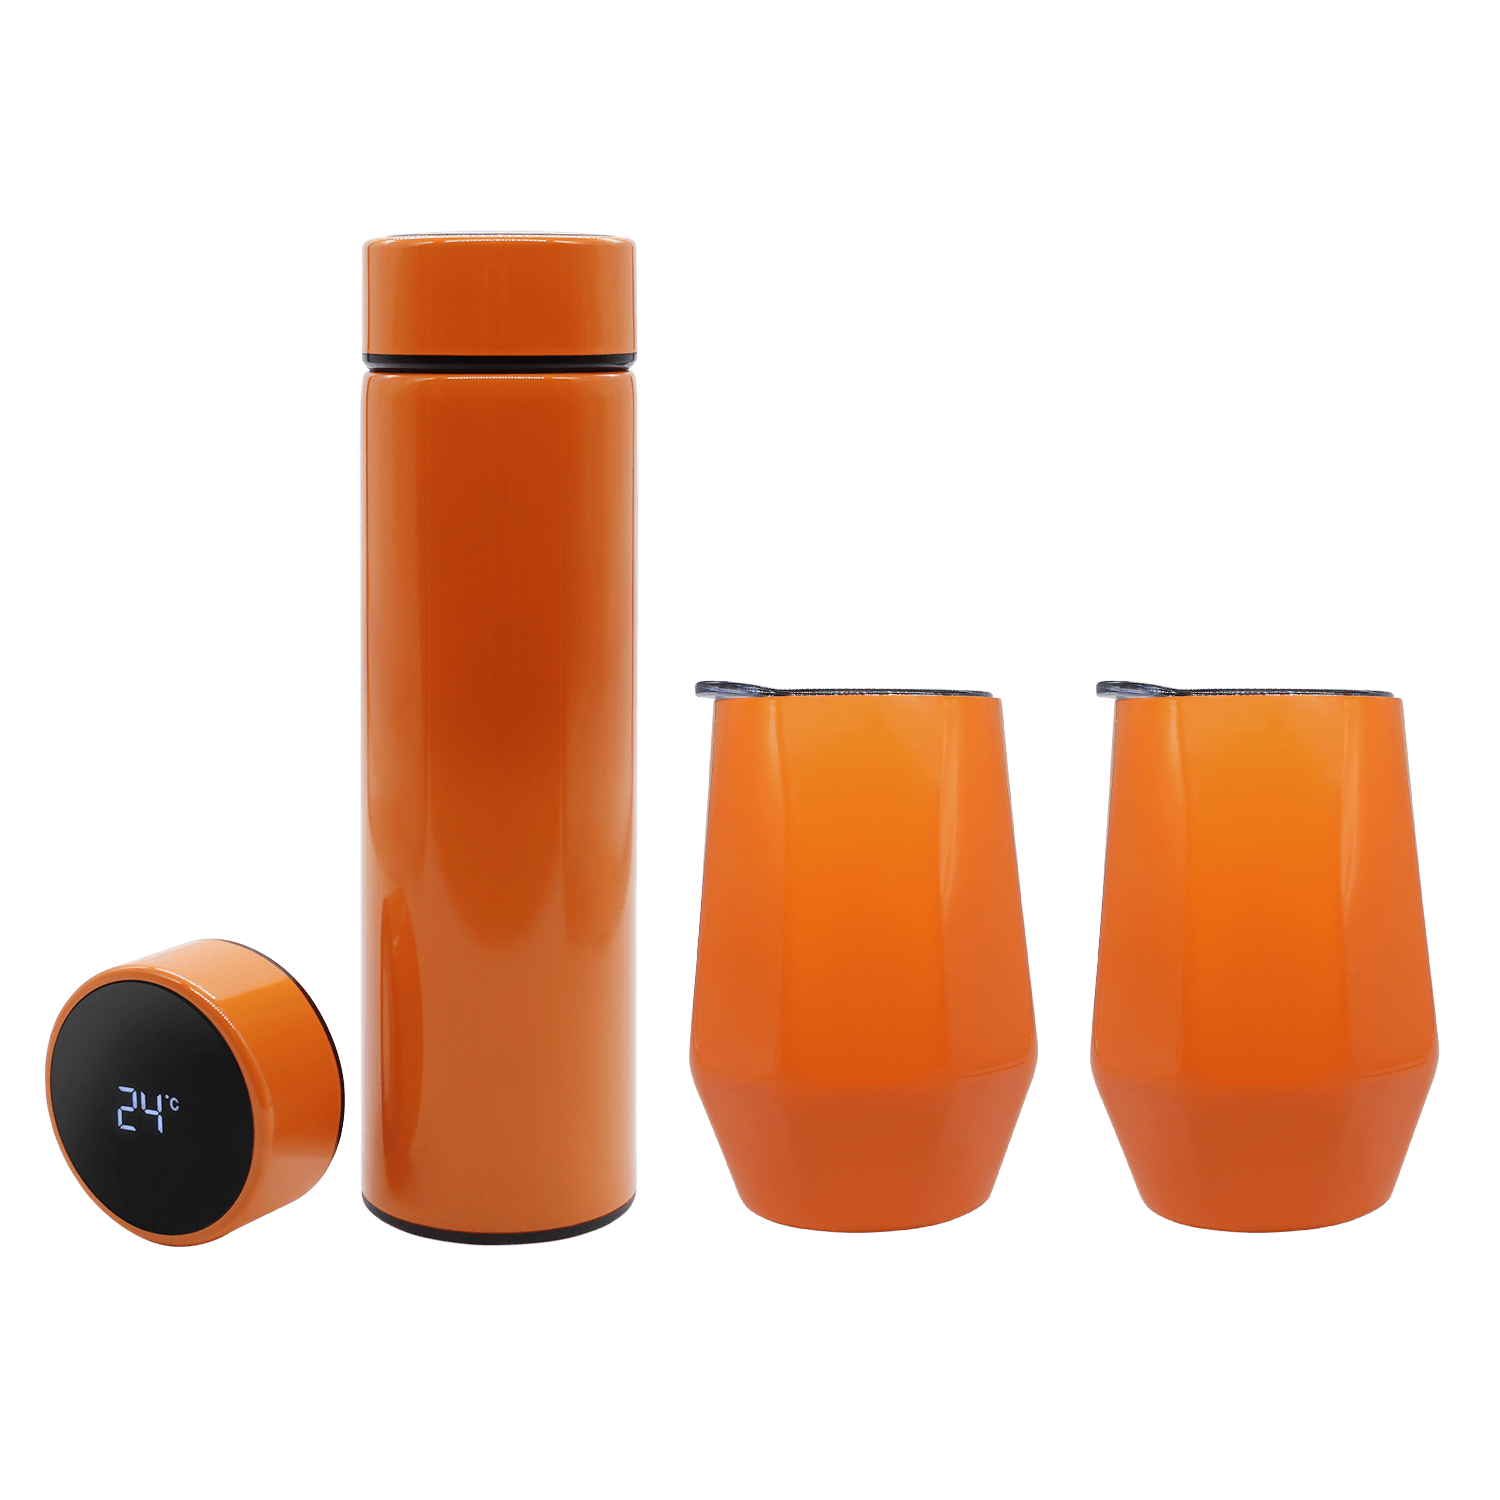 Набор Hot Box Е2 W (оранжевый), оранжевый, металл, микрогофрокартон